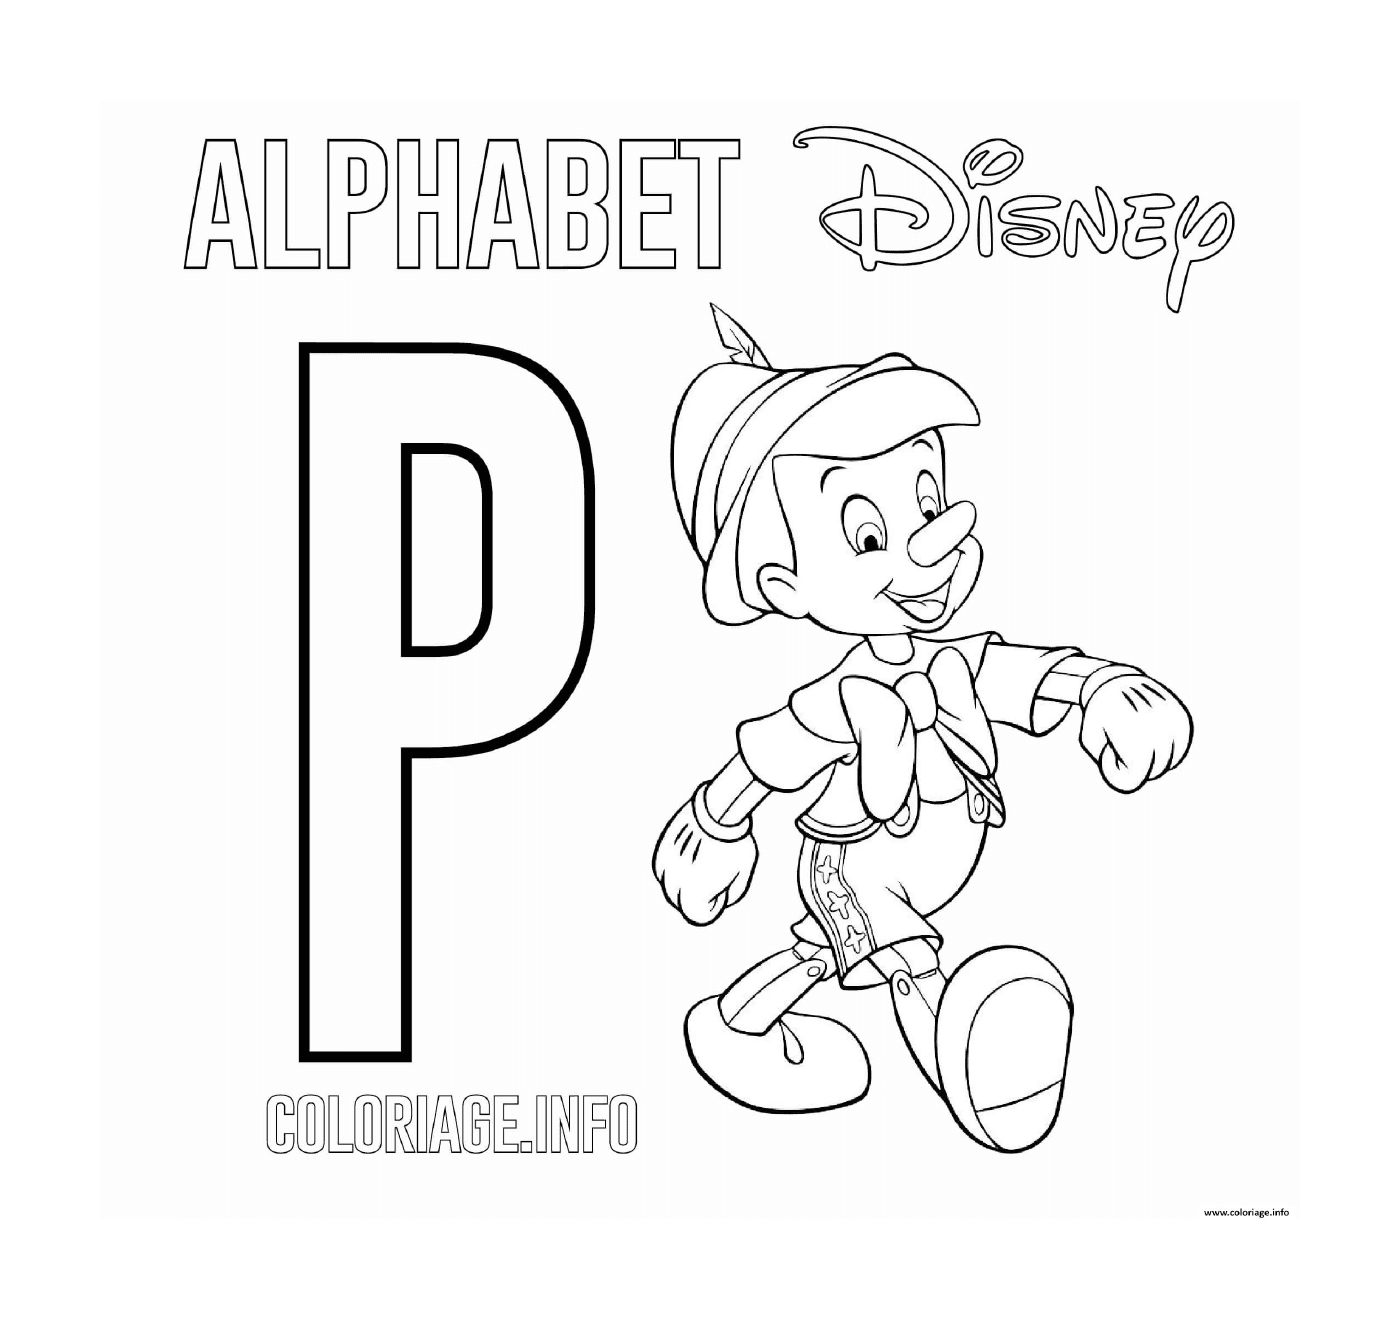  Letter P for Pinocchio, Disney 